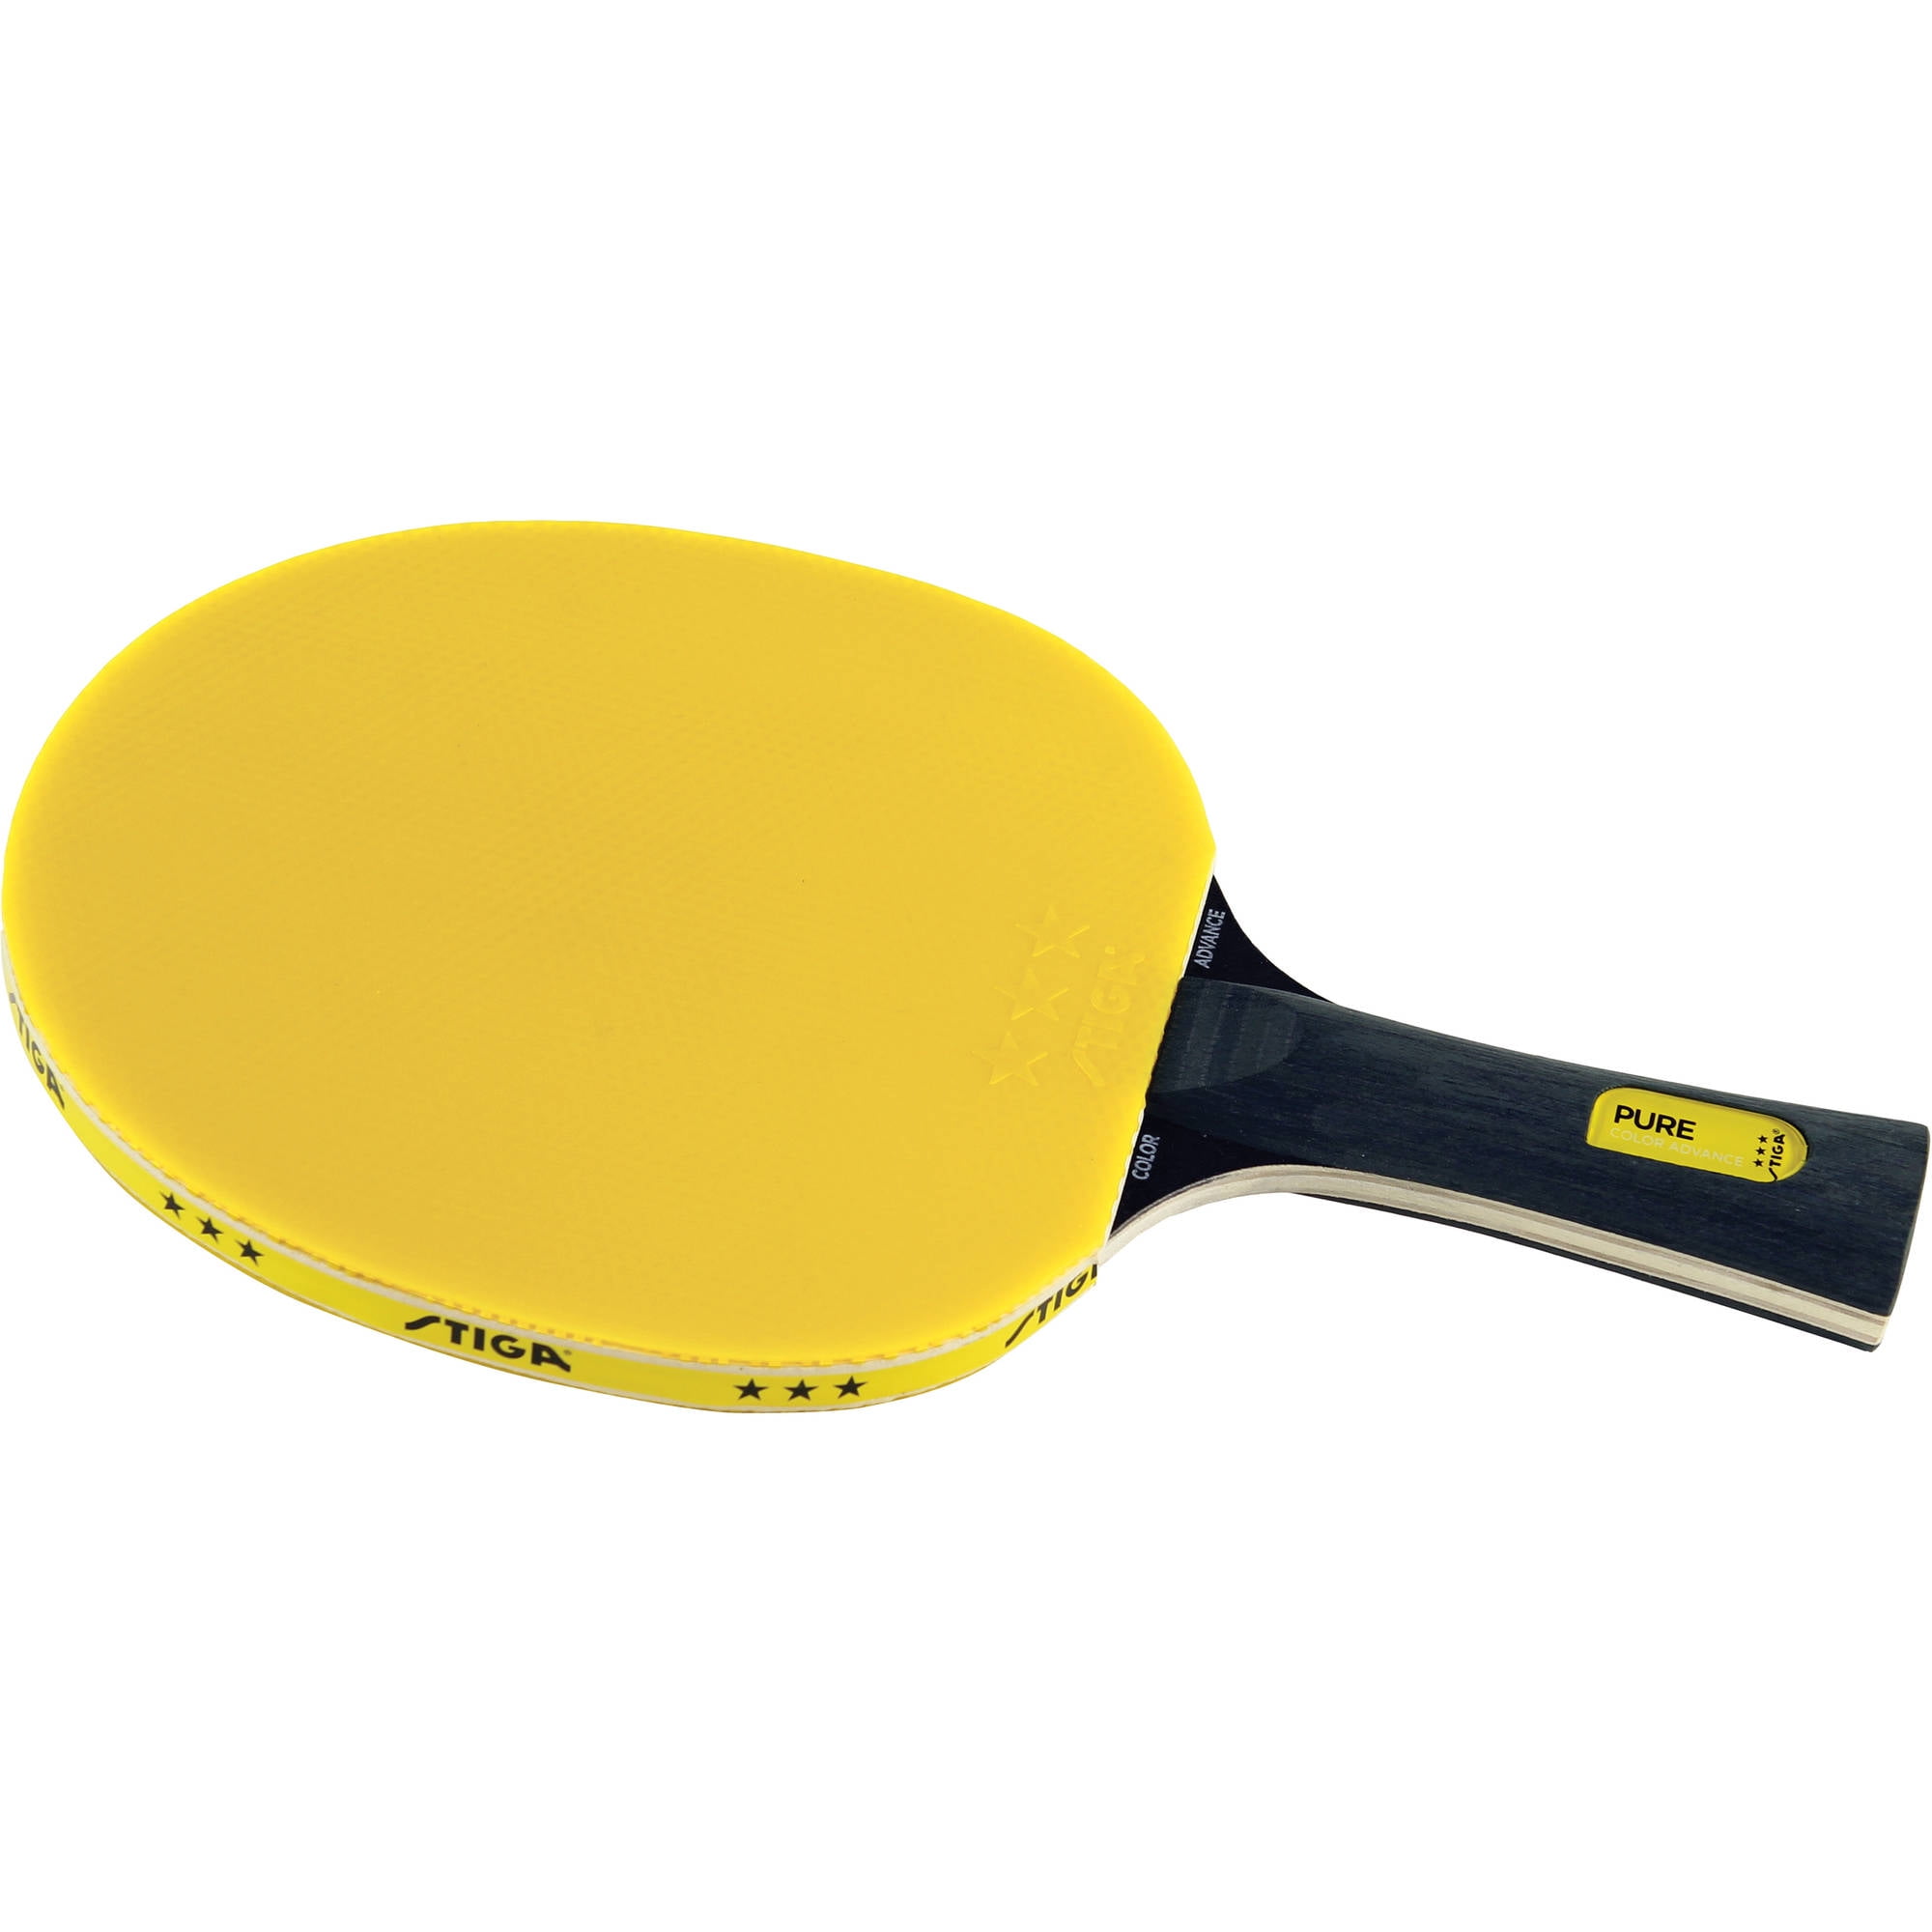 STIGA Aluminum Table Tennis Raket Hard Case Transports and Stores One Raket a... 